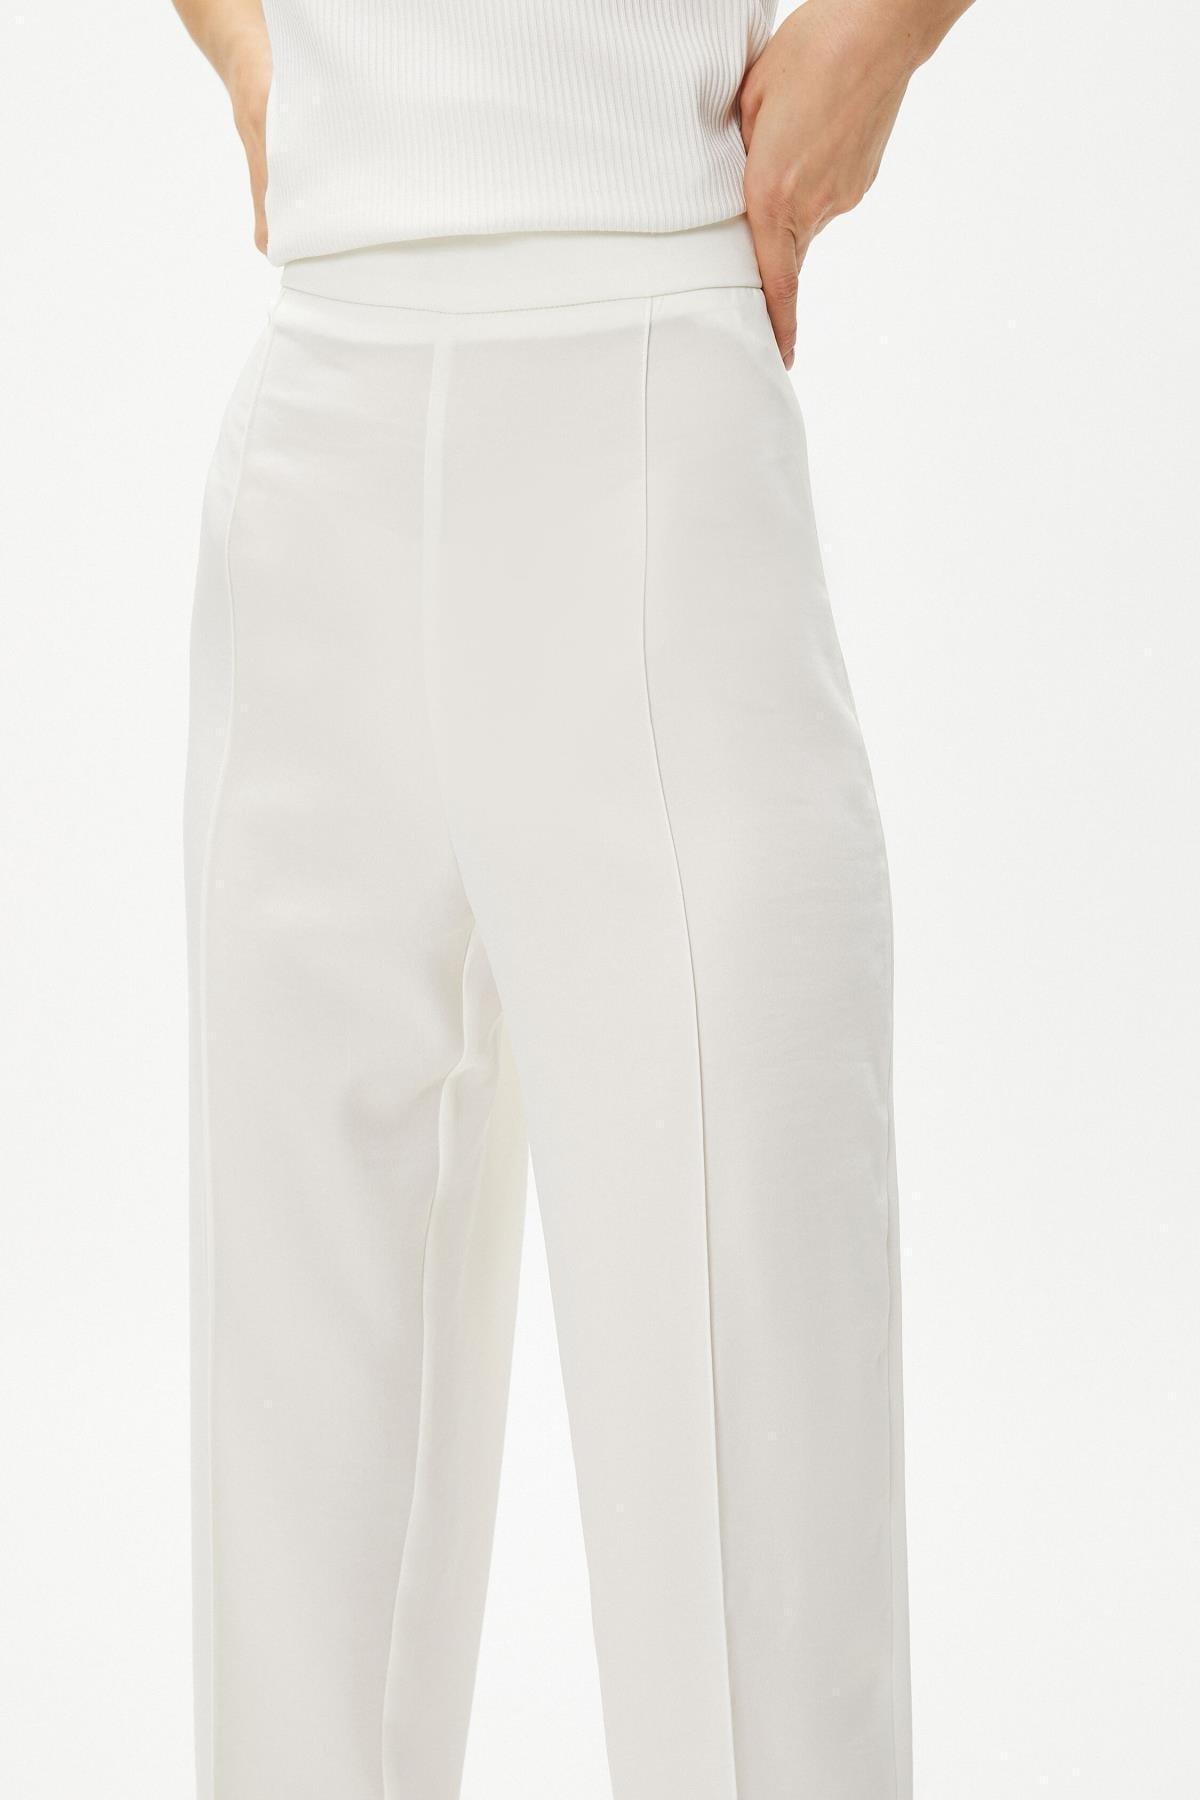 Koton - White Straight Plain Suit Pants